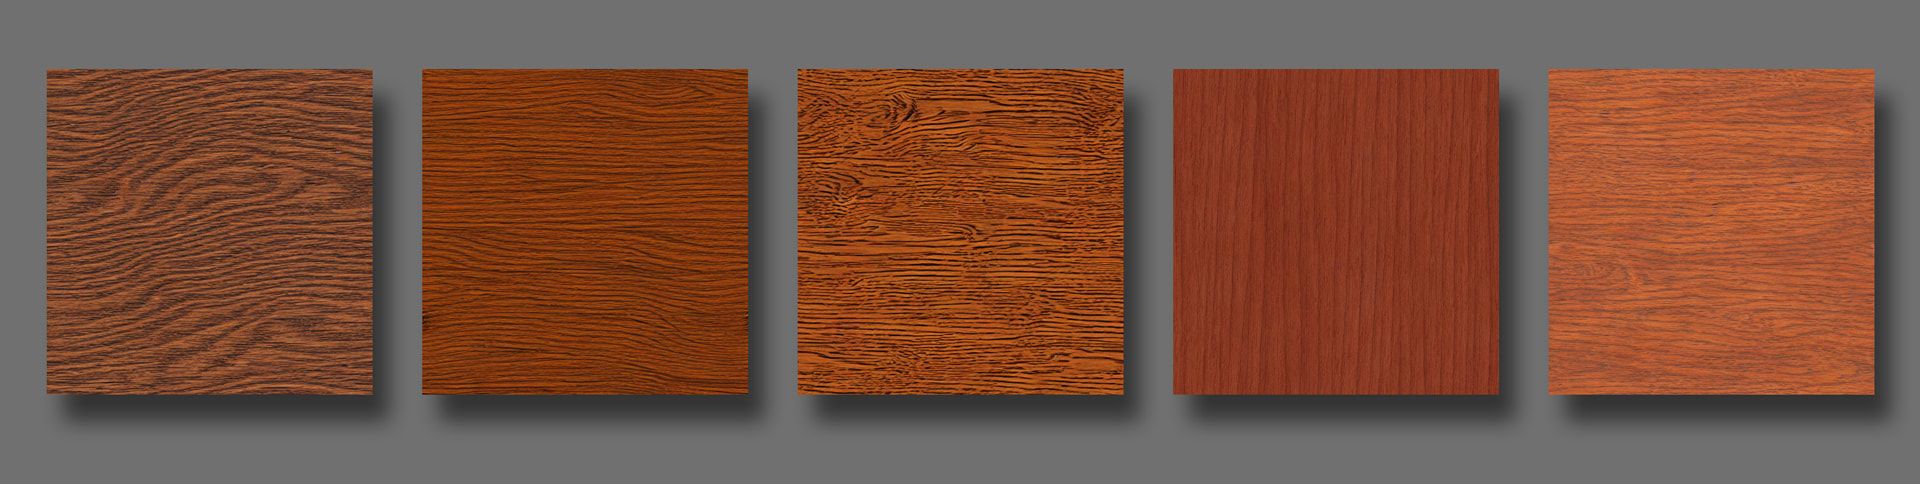 wood grain tiled textures of various design